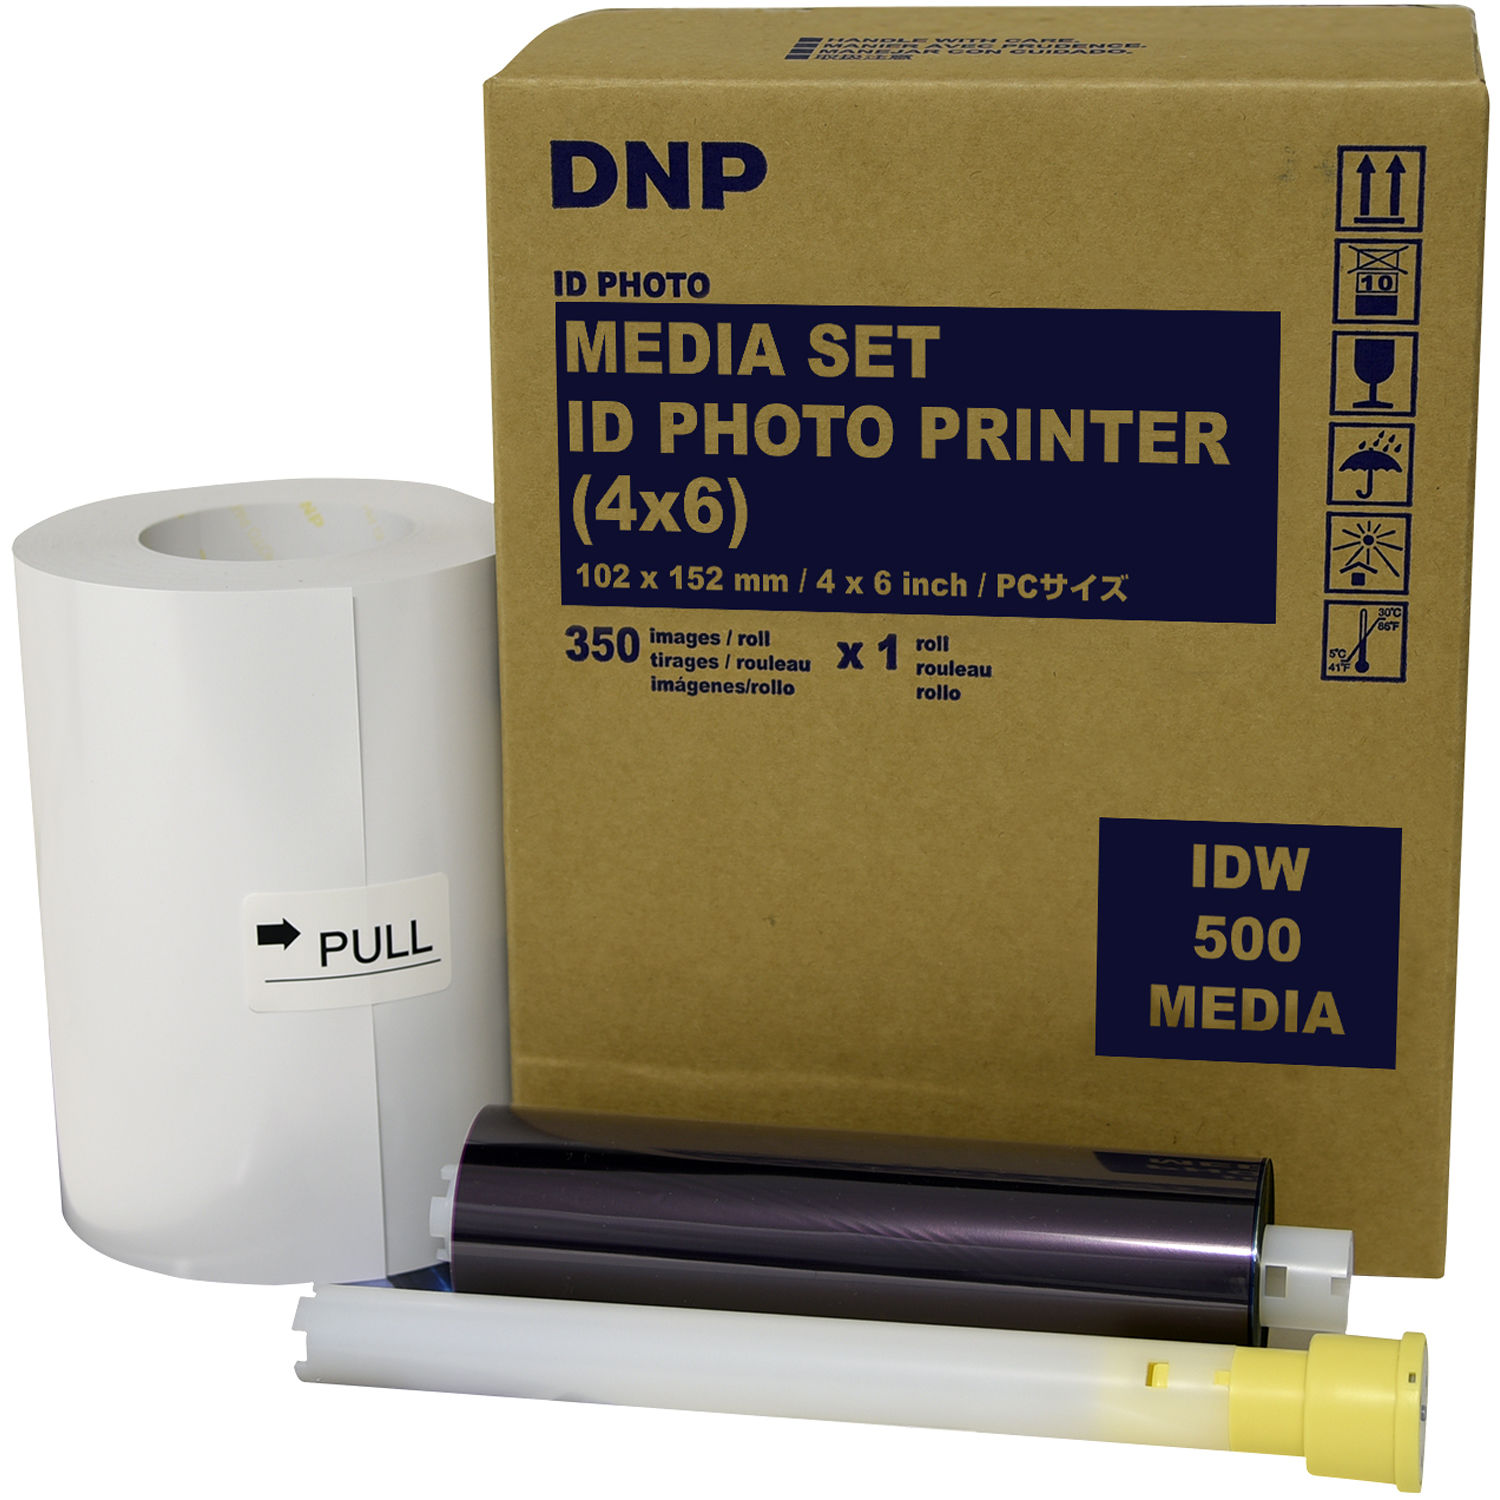 DNP IDW500 Media Set (4 x 6", 350 Prints)